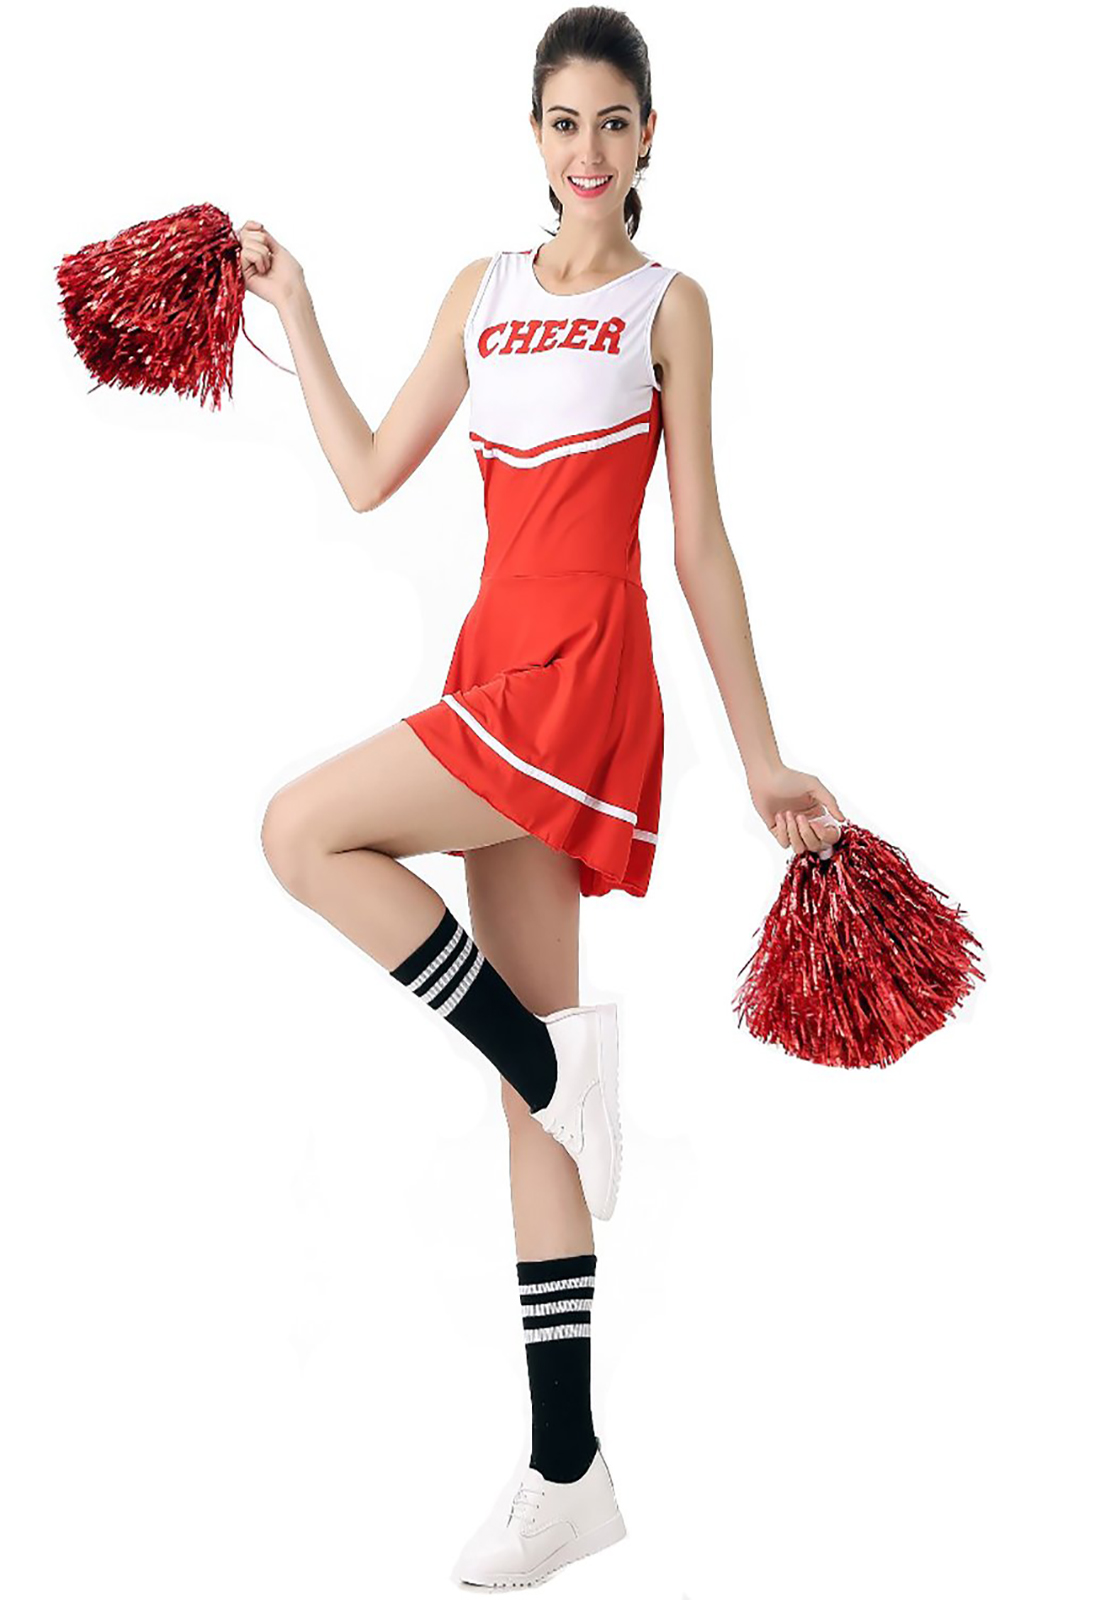 Traje de Cheerleader Vermelho Traje Fantasia High School Musical Cheerleader Uniforme Sem Pom-Pom